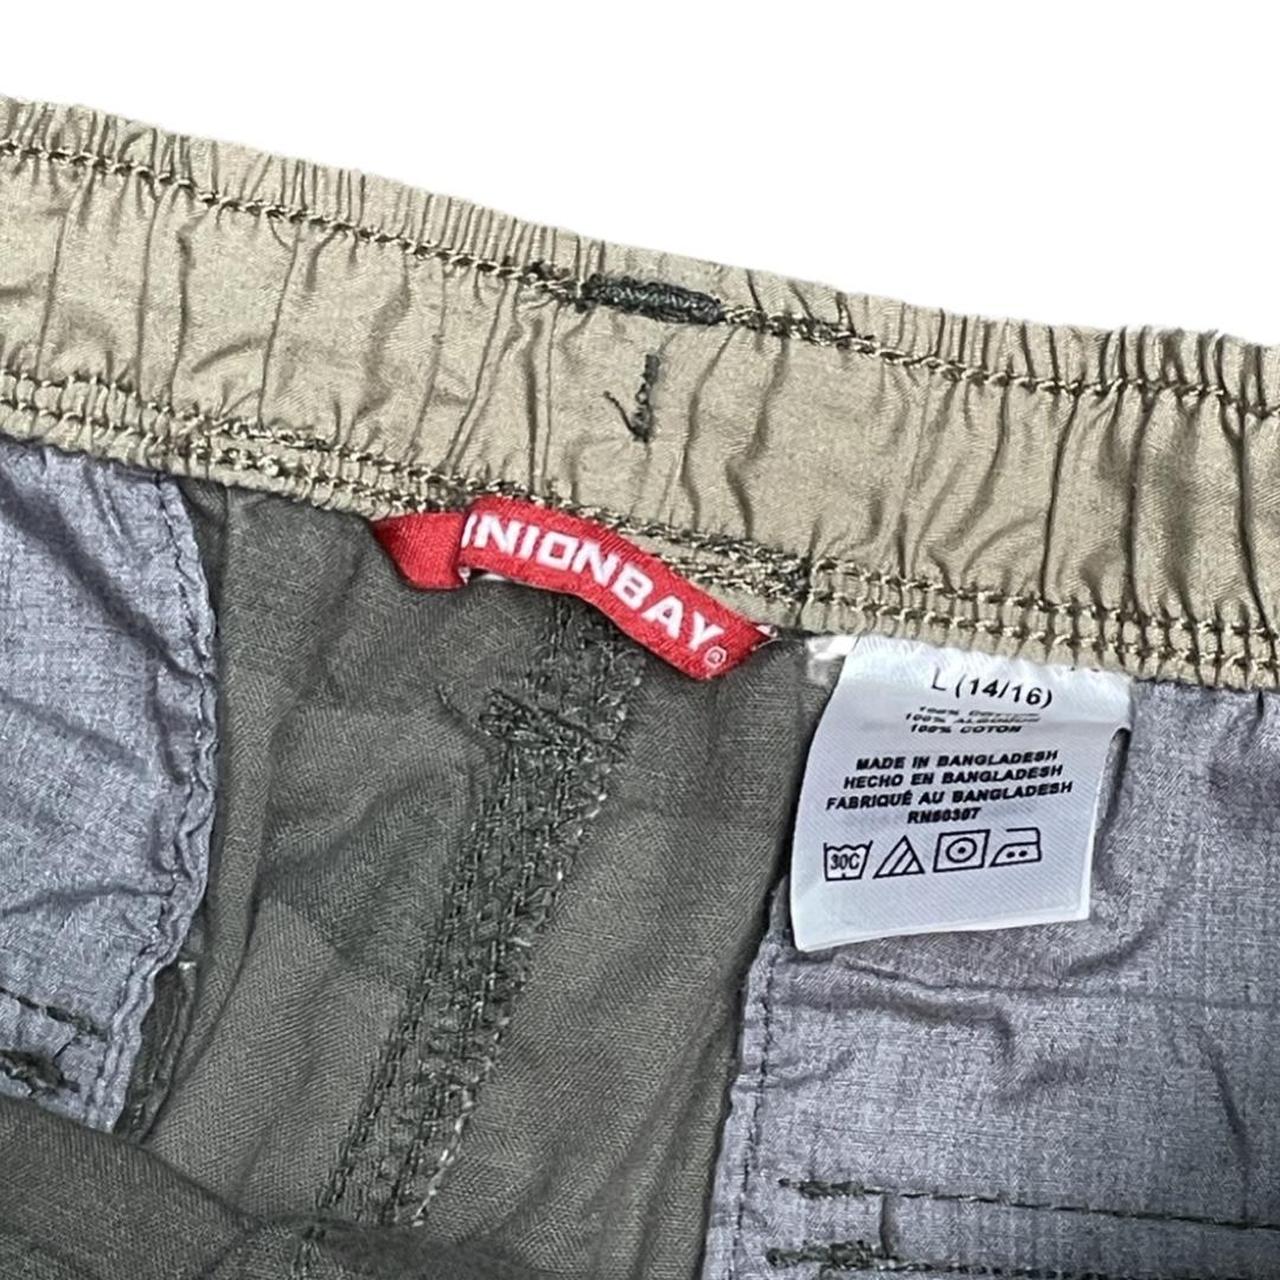 Product Image 3 - ☠︎ unionbay cargo shorts ☠︎

☠︎